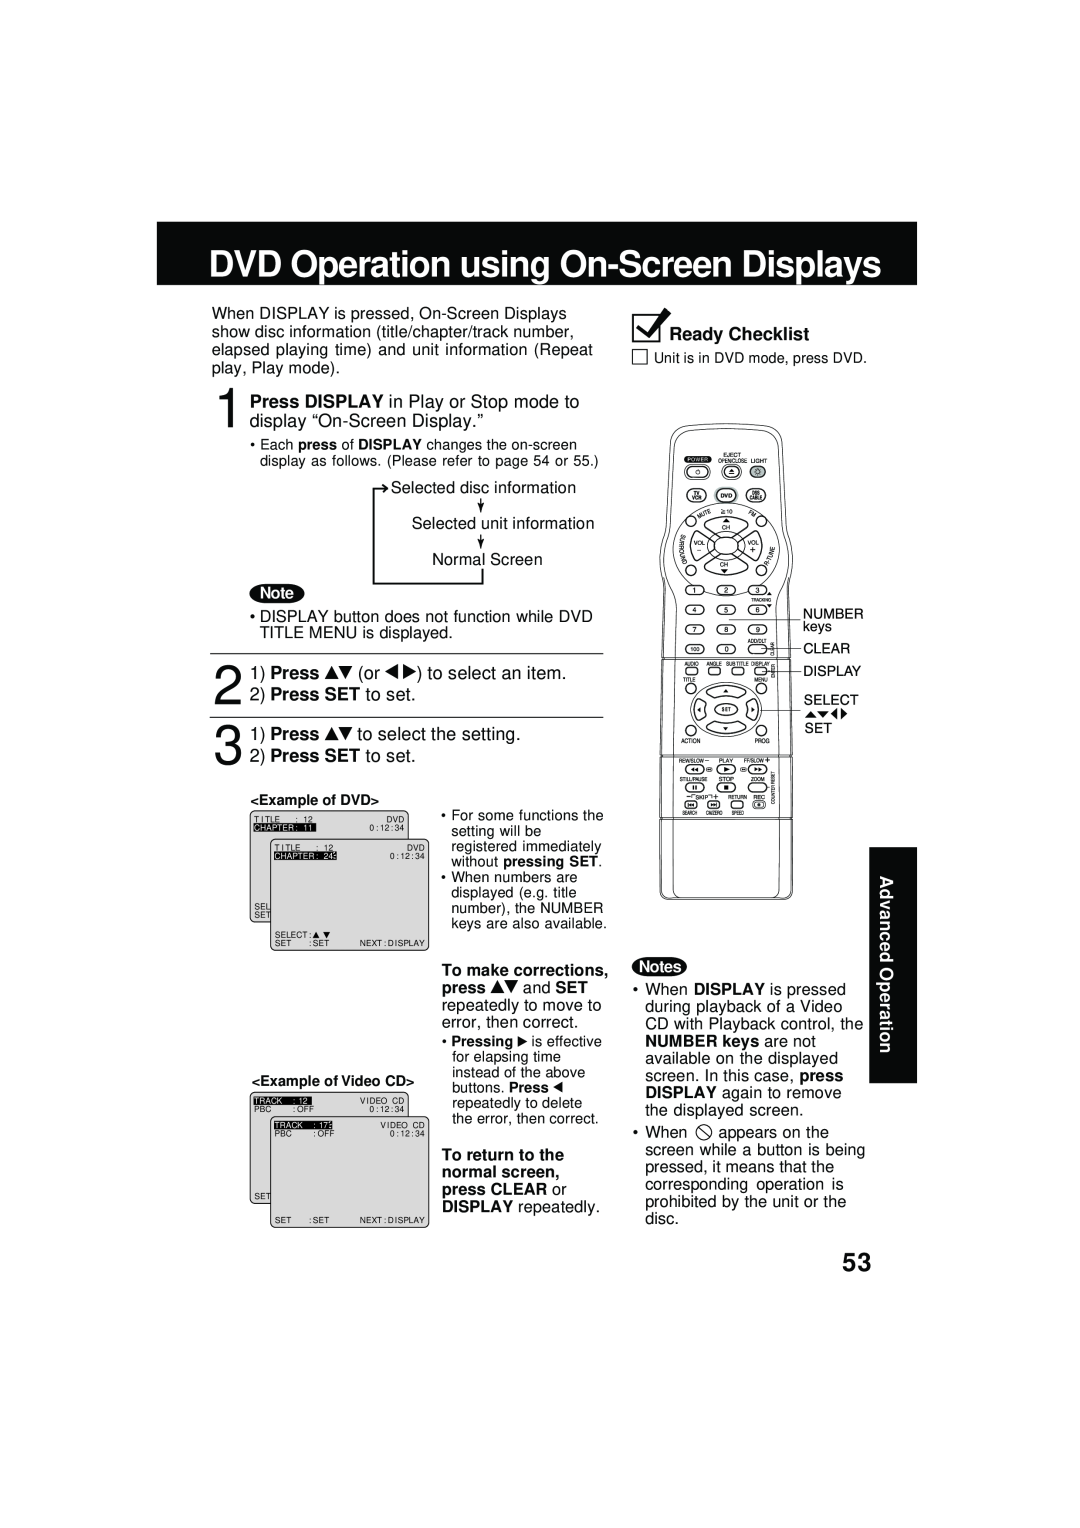 Panasonic PV DM2092 Press DISPLAY in Play or Stop mode to display “On-Screen Display.”, 2 1 Press or to select an item 